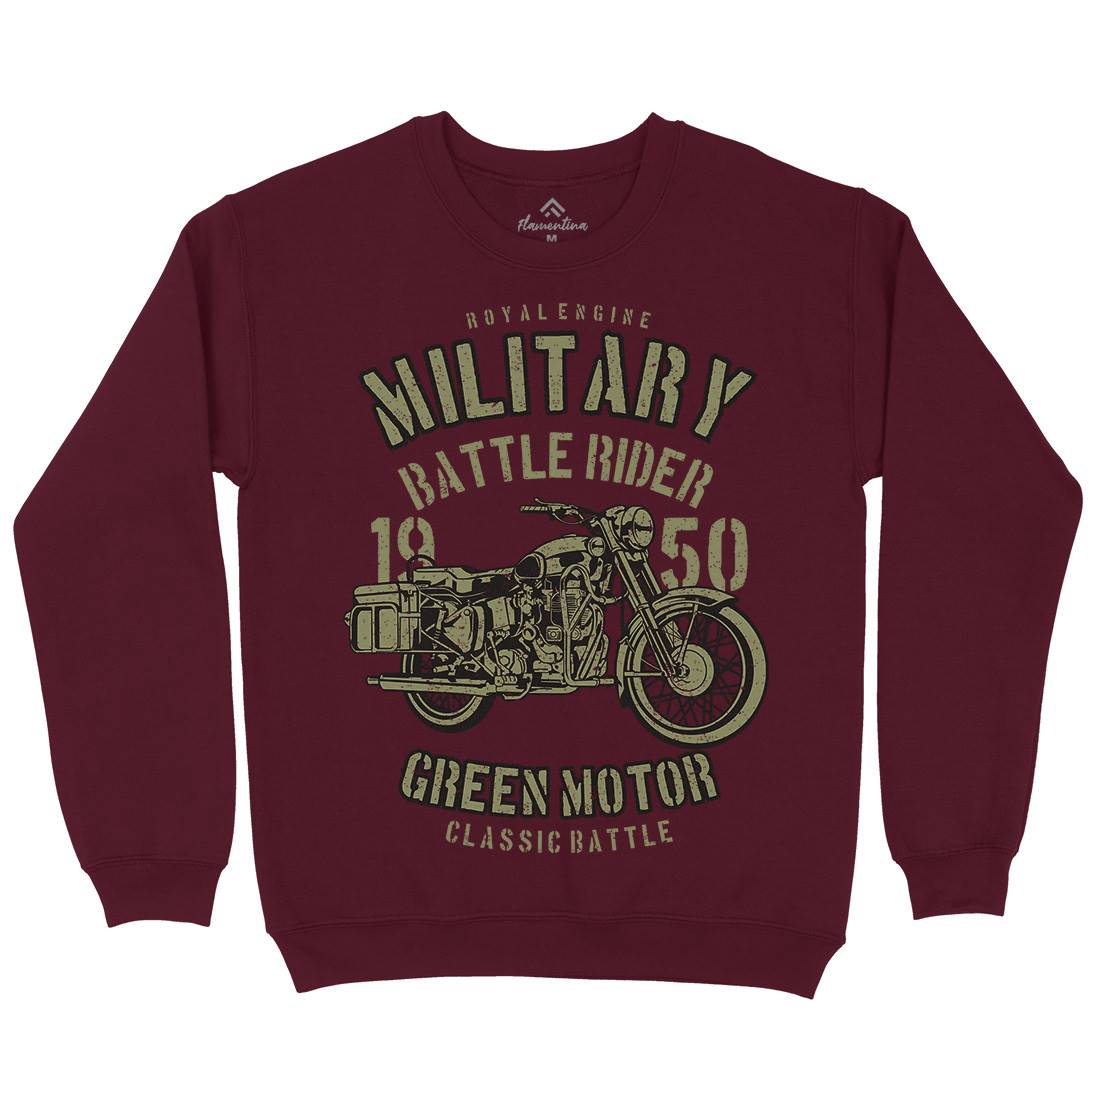 Green Military Ride Kids Crew Neck Sweatshirt Army A678